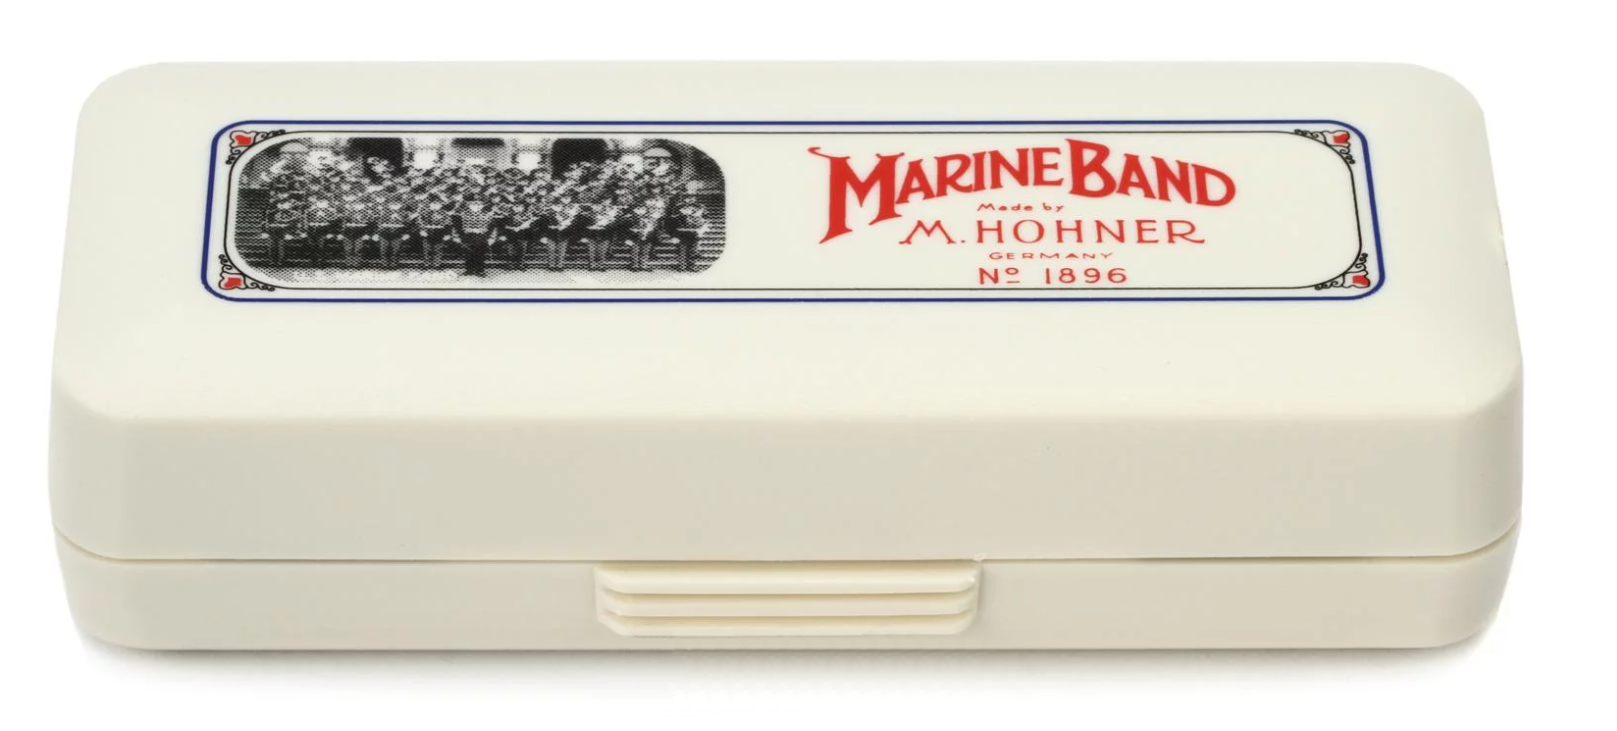 HOHNER  Diatonic Harmonica, Marine Band 1896 - Key of E